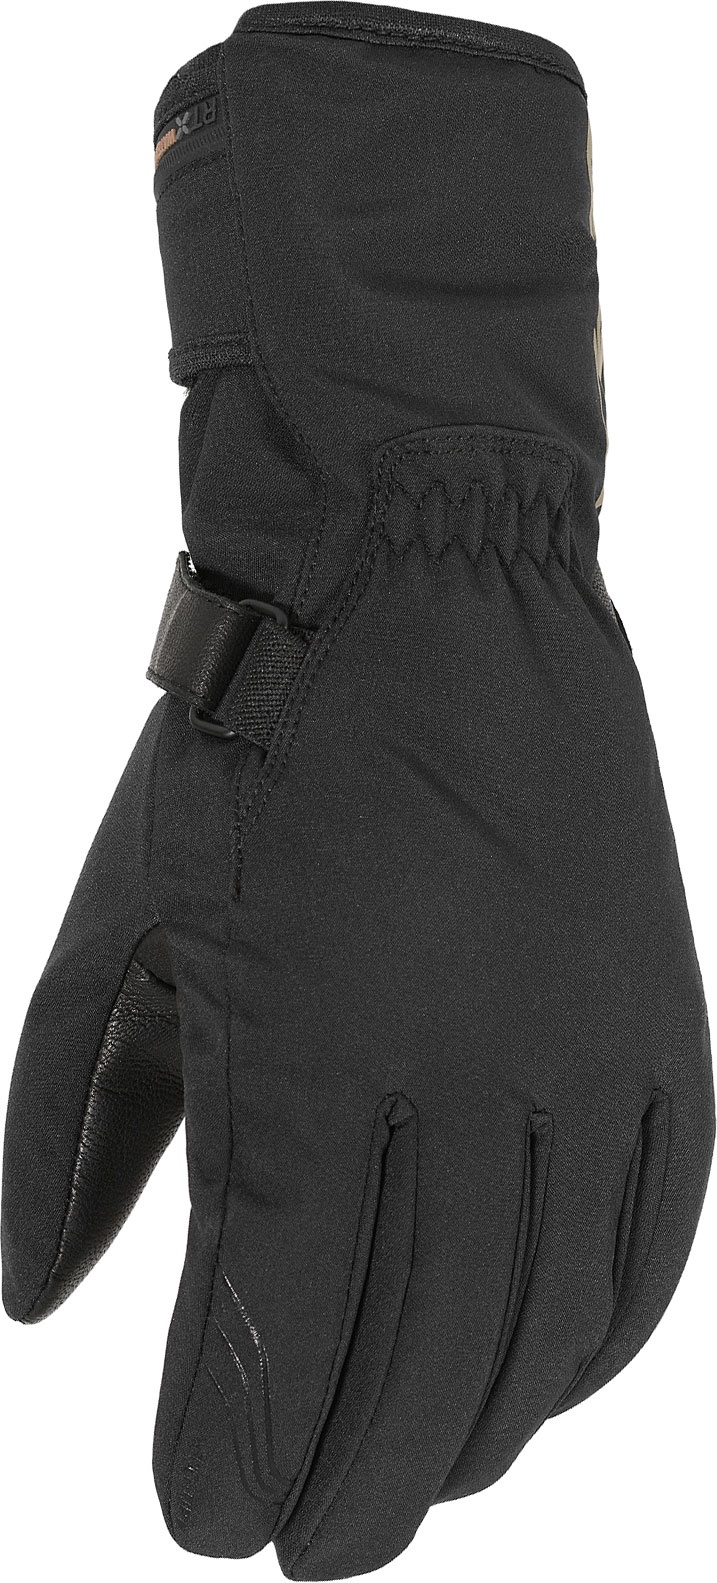 Macna Tigo RTX Evo, gants imperméables pour femmes - Noir - L